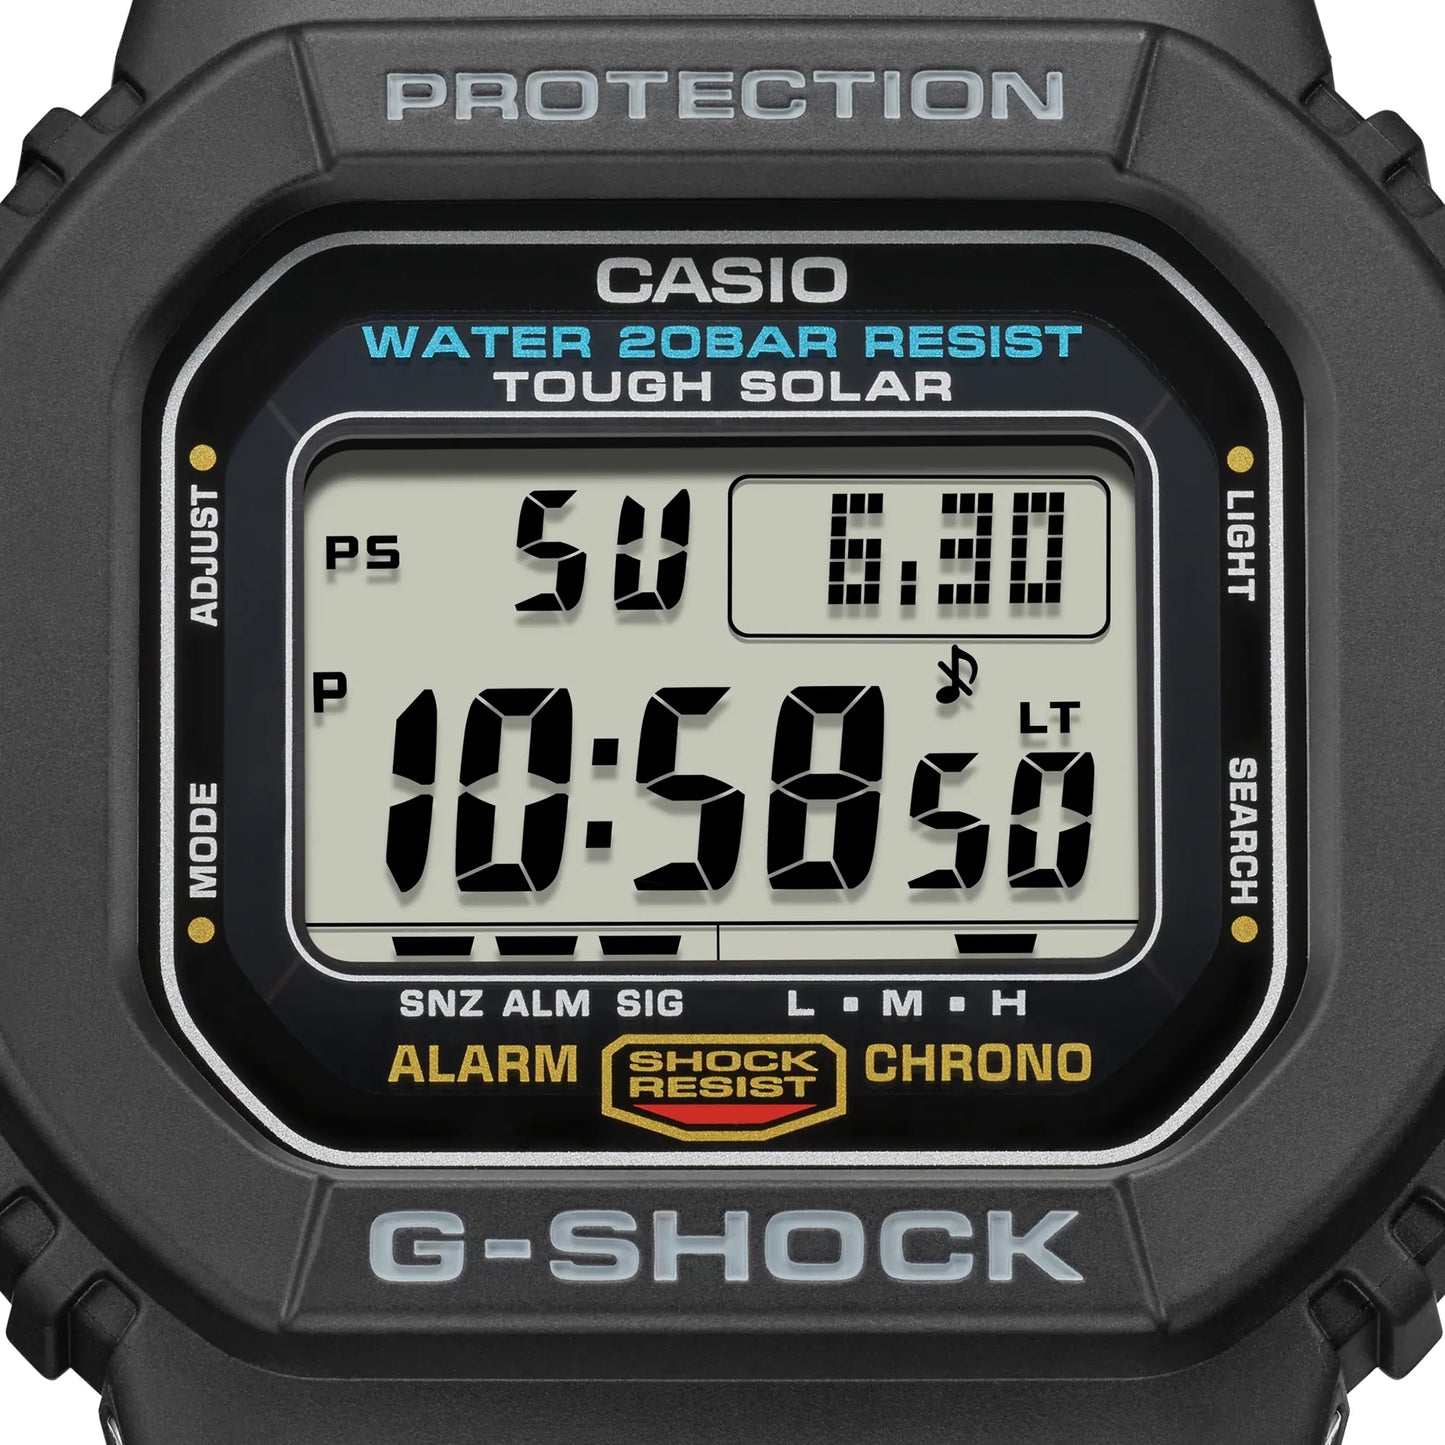 G-SHOCK 国内正規品 カシオ Gショック 腕時計 メンズ タフ ソーラー 樹脂バンド G-5600UE-1JF